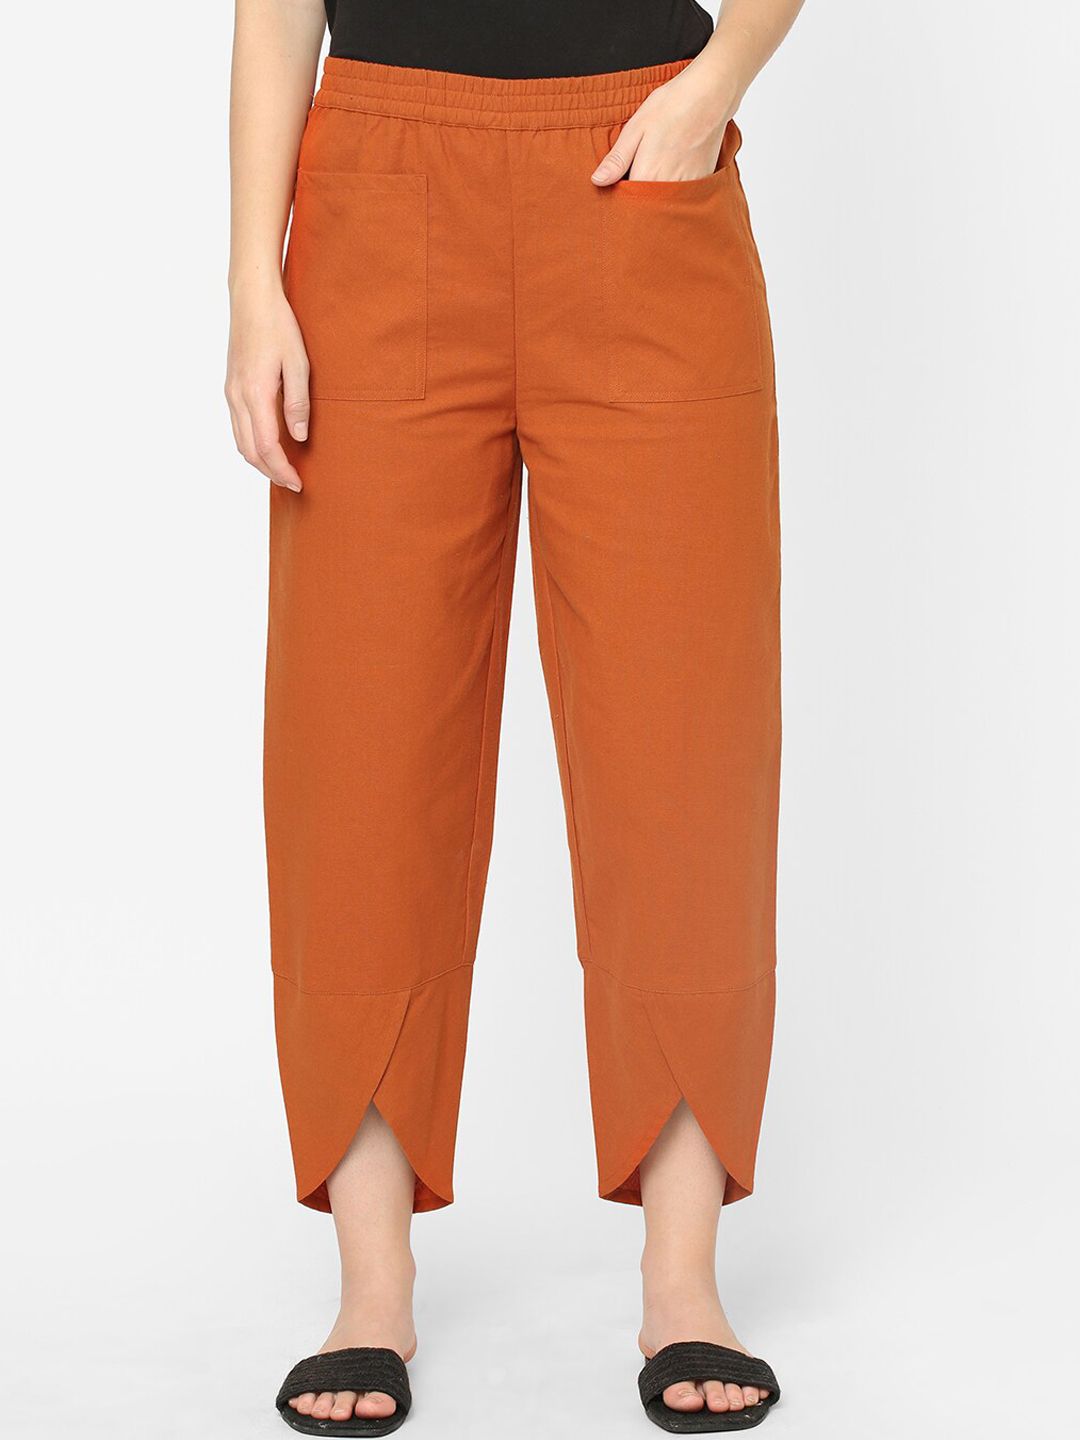 Mystere Paris Women Orange Solid Cotton Lounge Pants Price in India